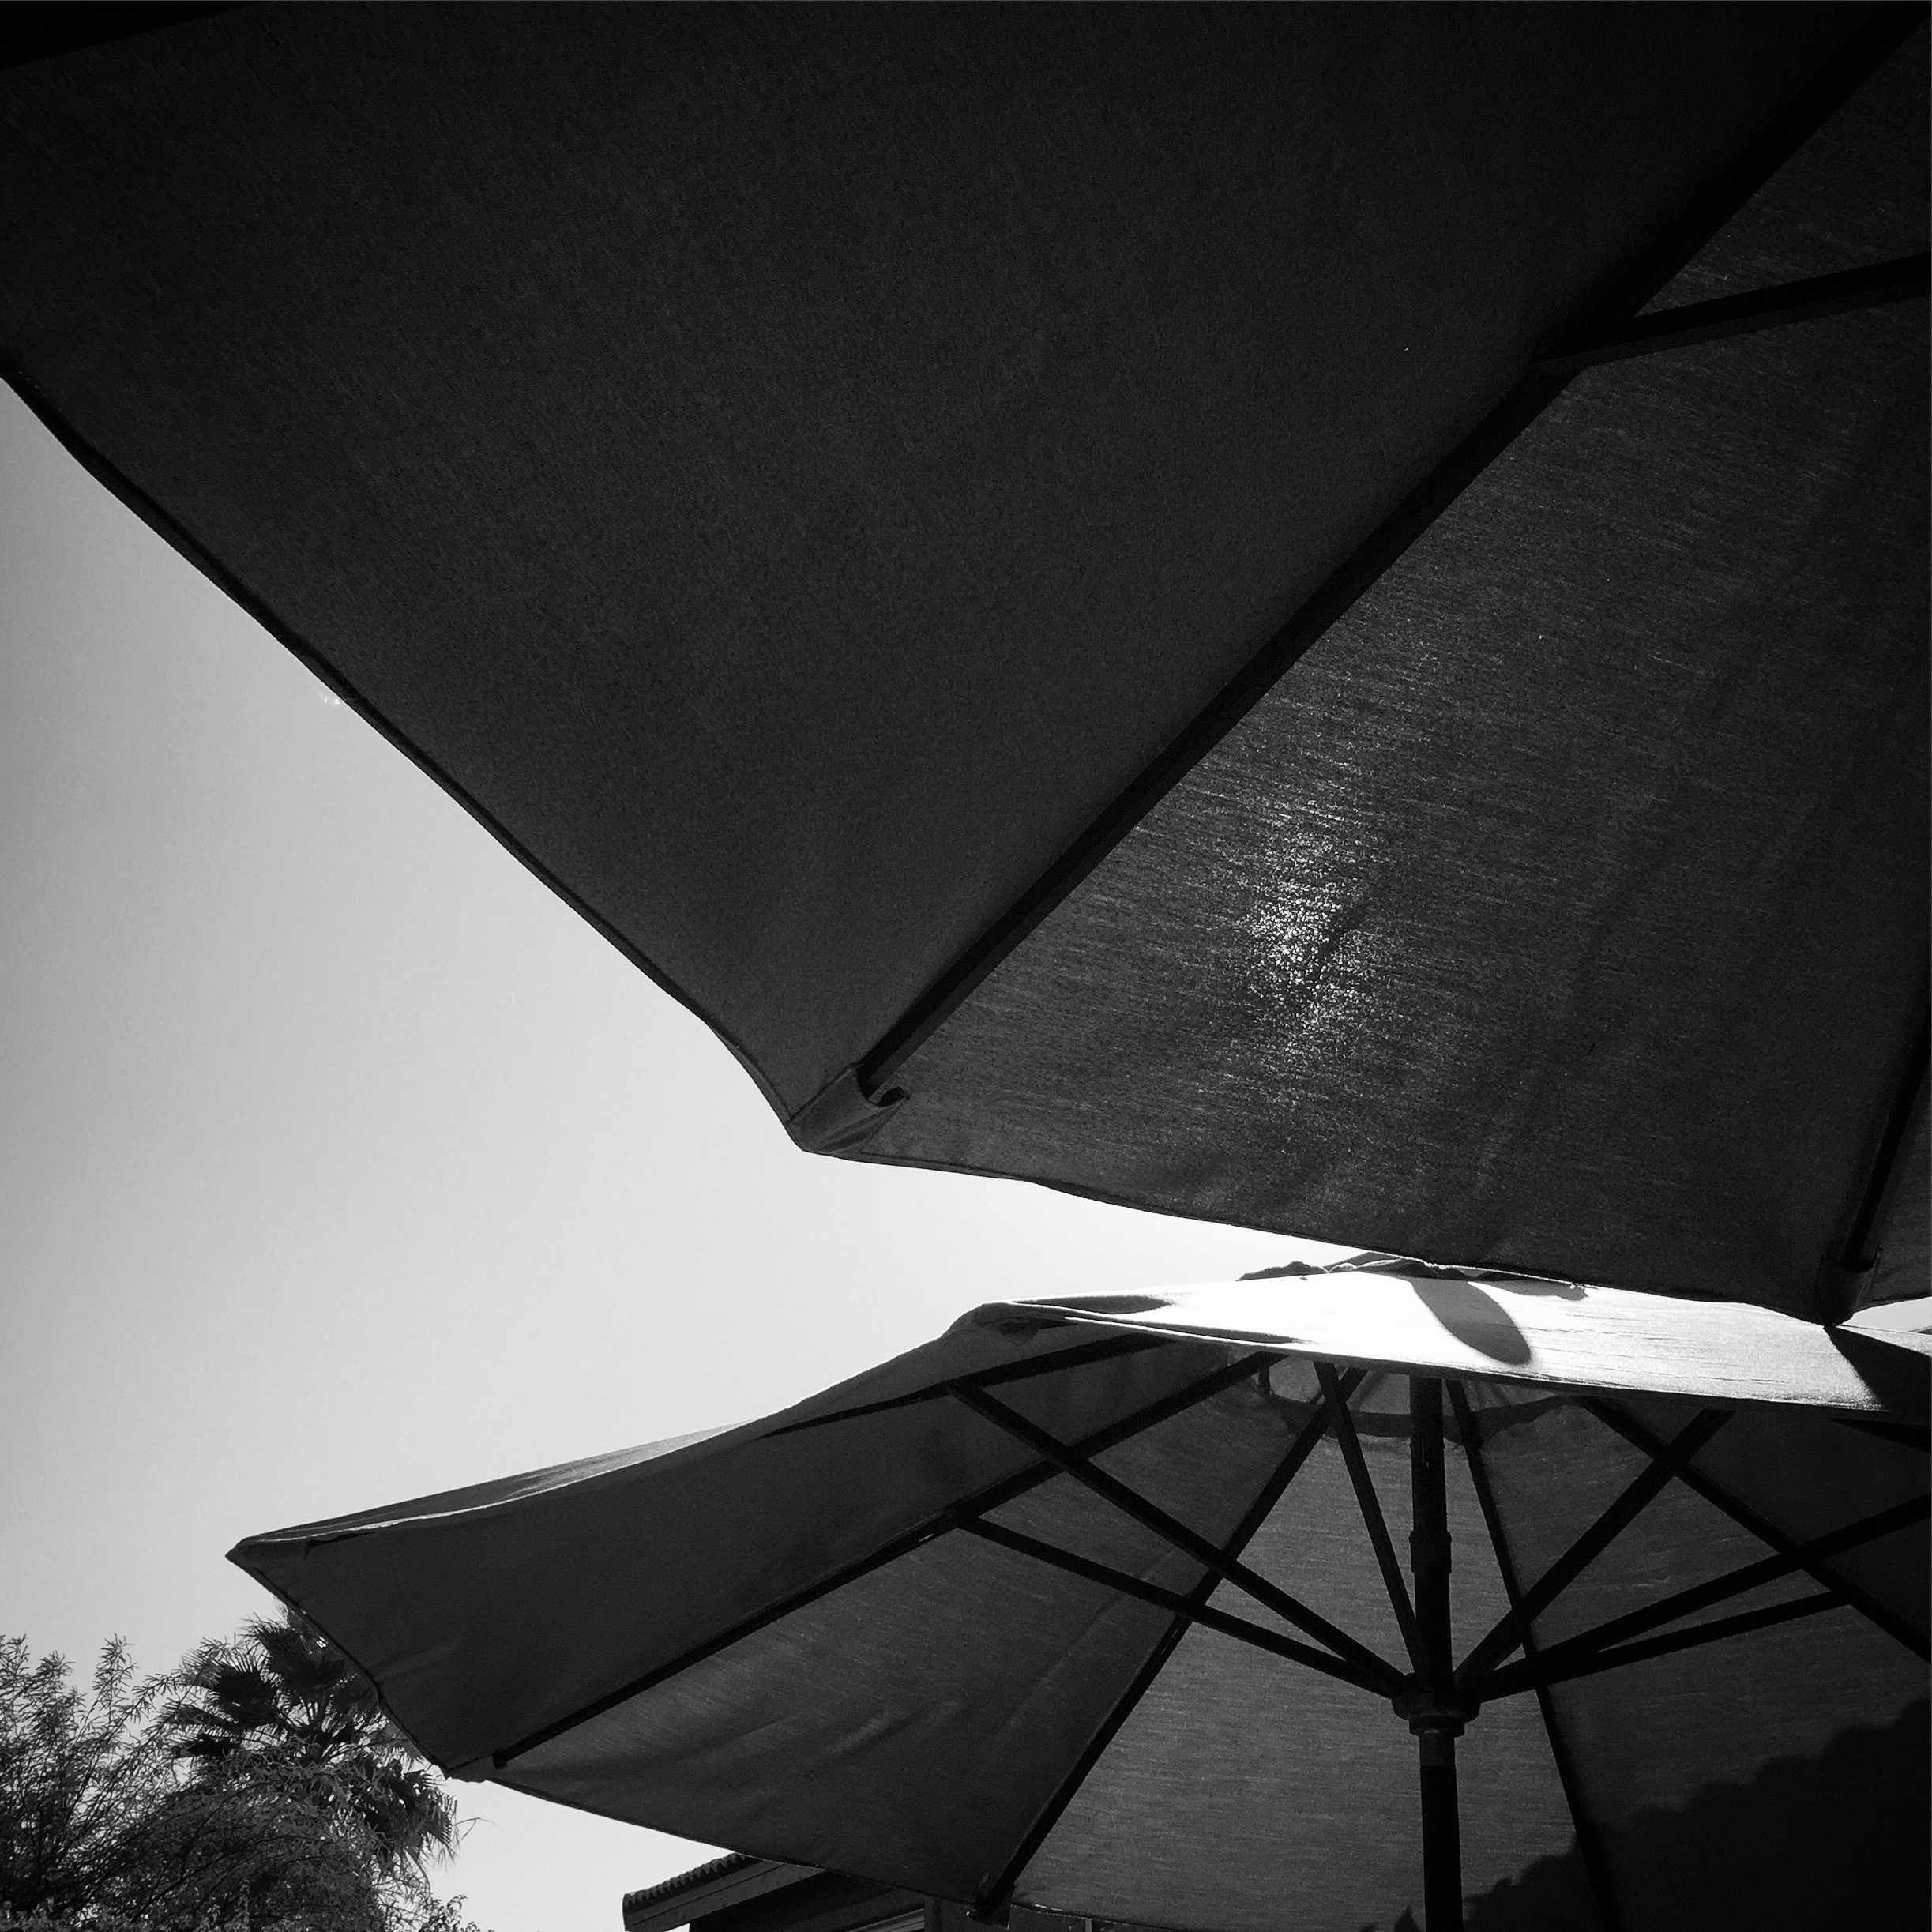 Umbrella Abstract, Palm Springs, CA [Photo]